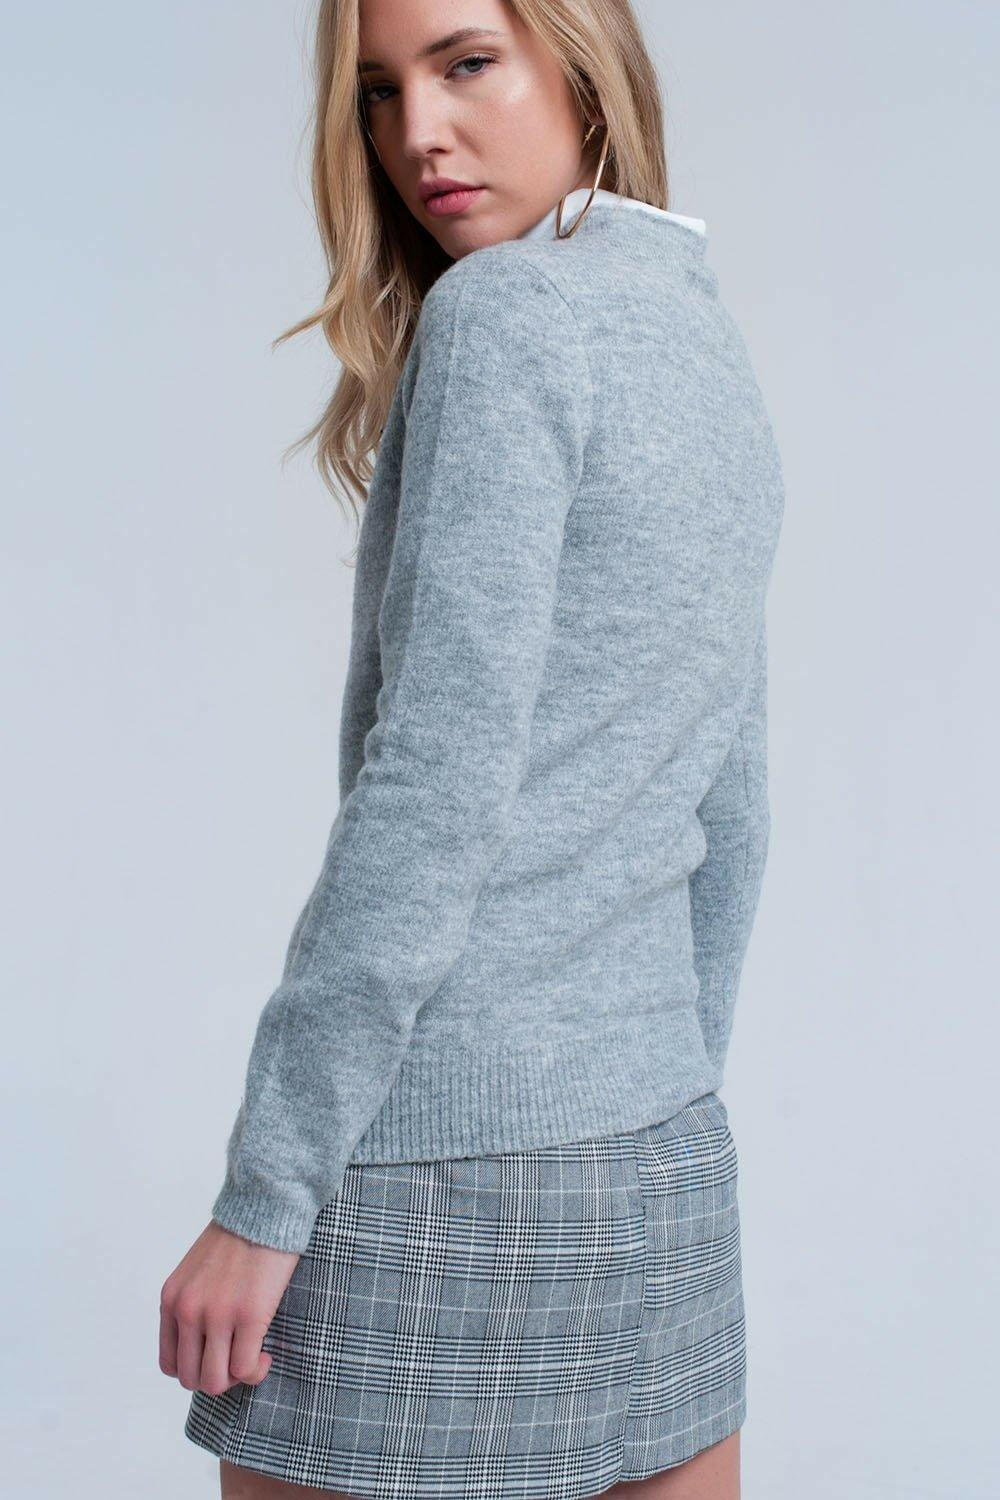 Gray Sweater - GENUINE AUTHENTIC BRAND LLC